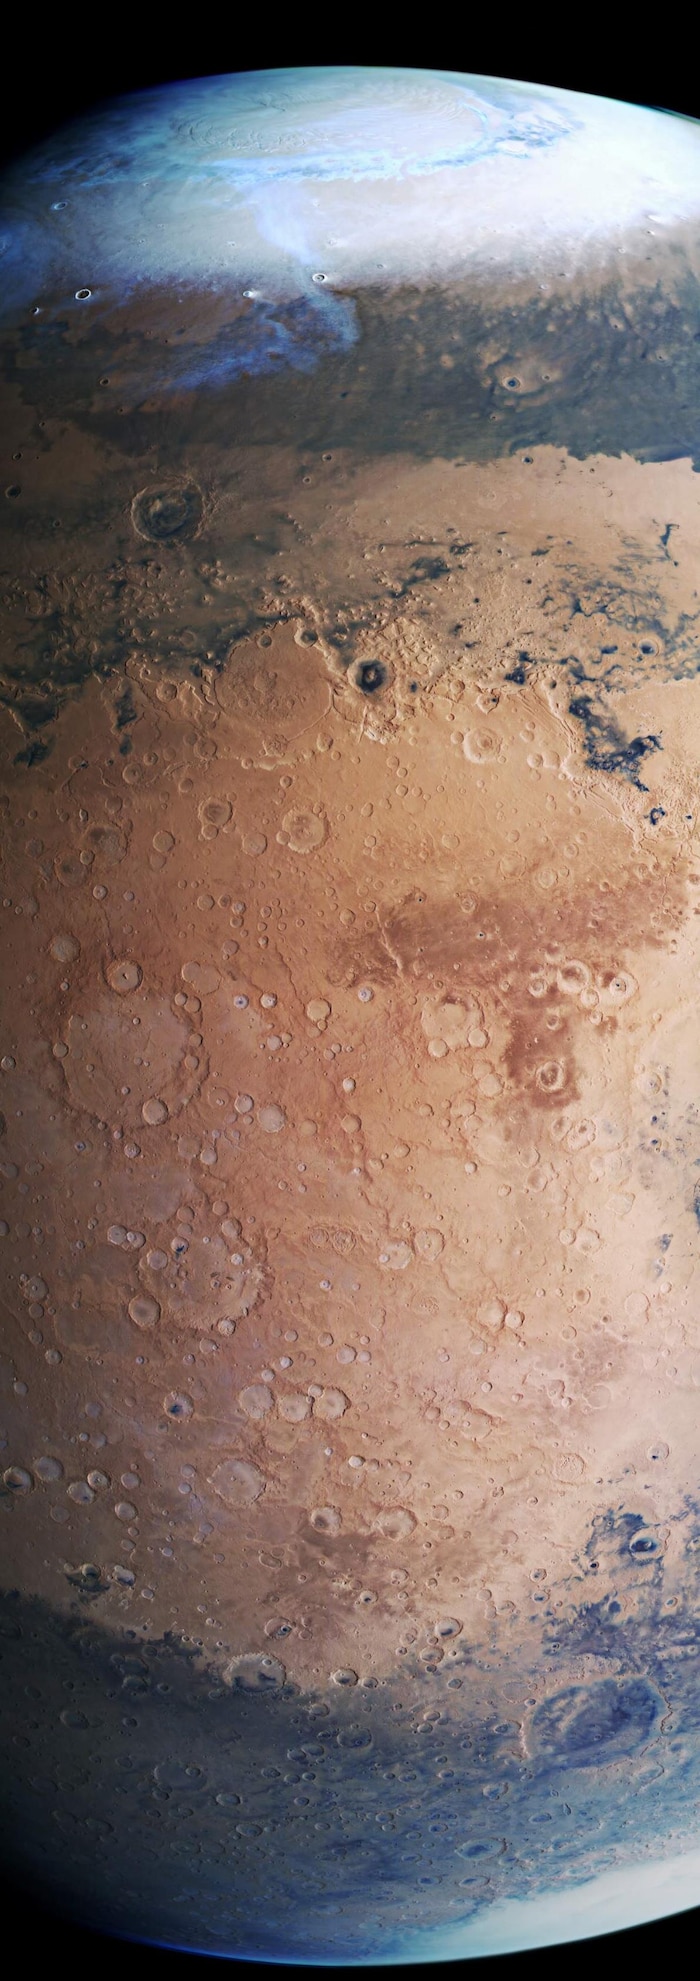 Image de Mars.